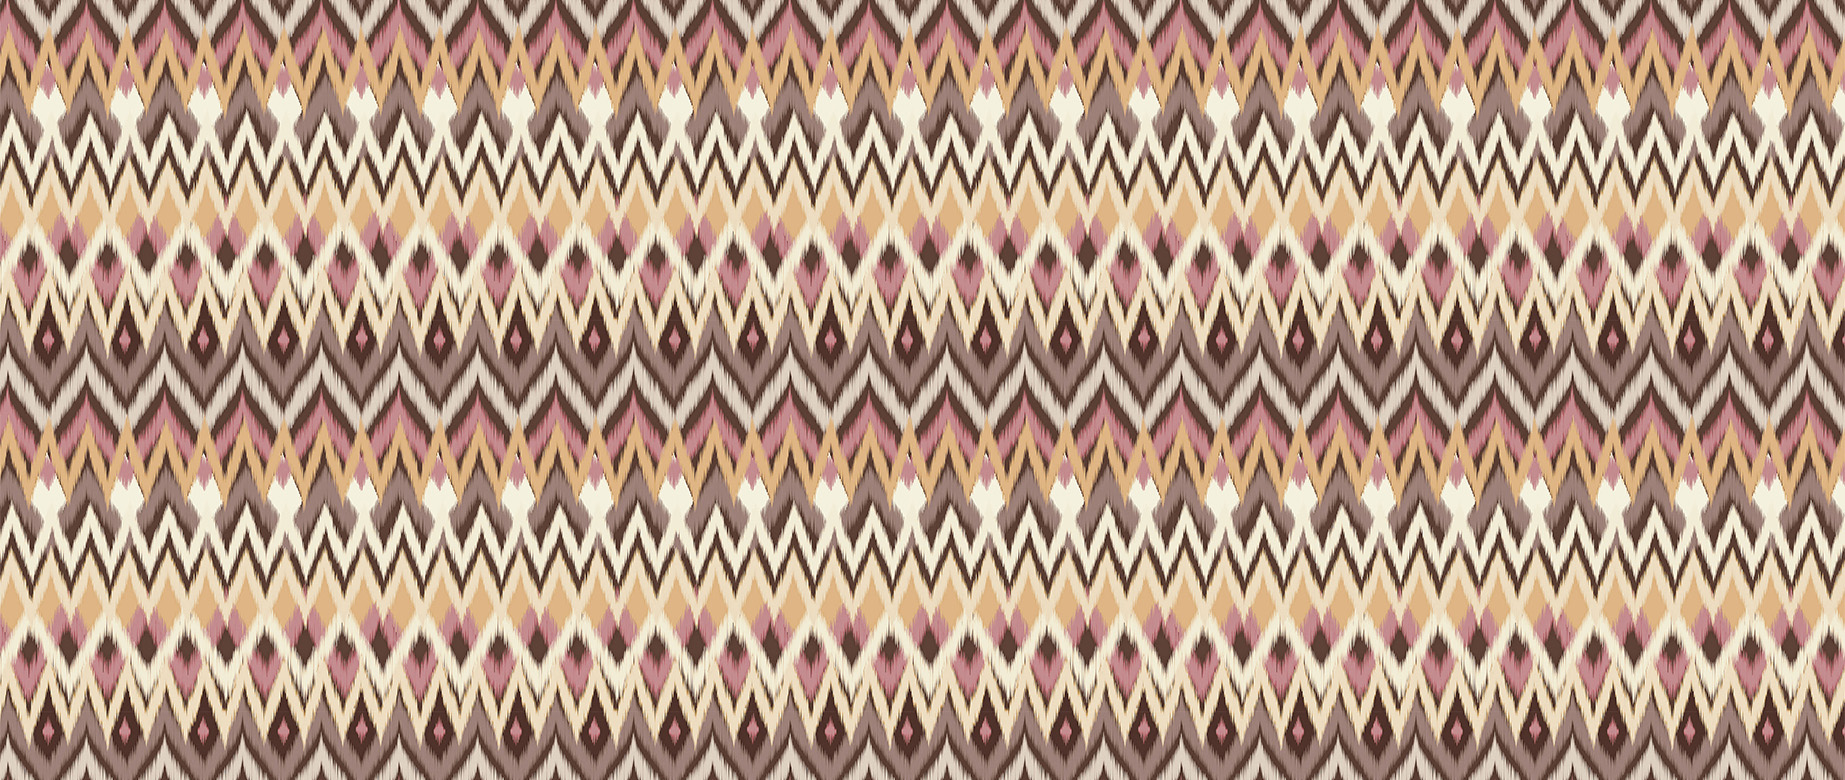 pastel-geometric-ikat-pattern-wallpapers-full-wide-view